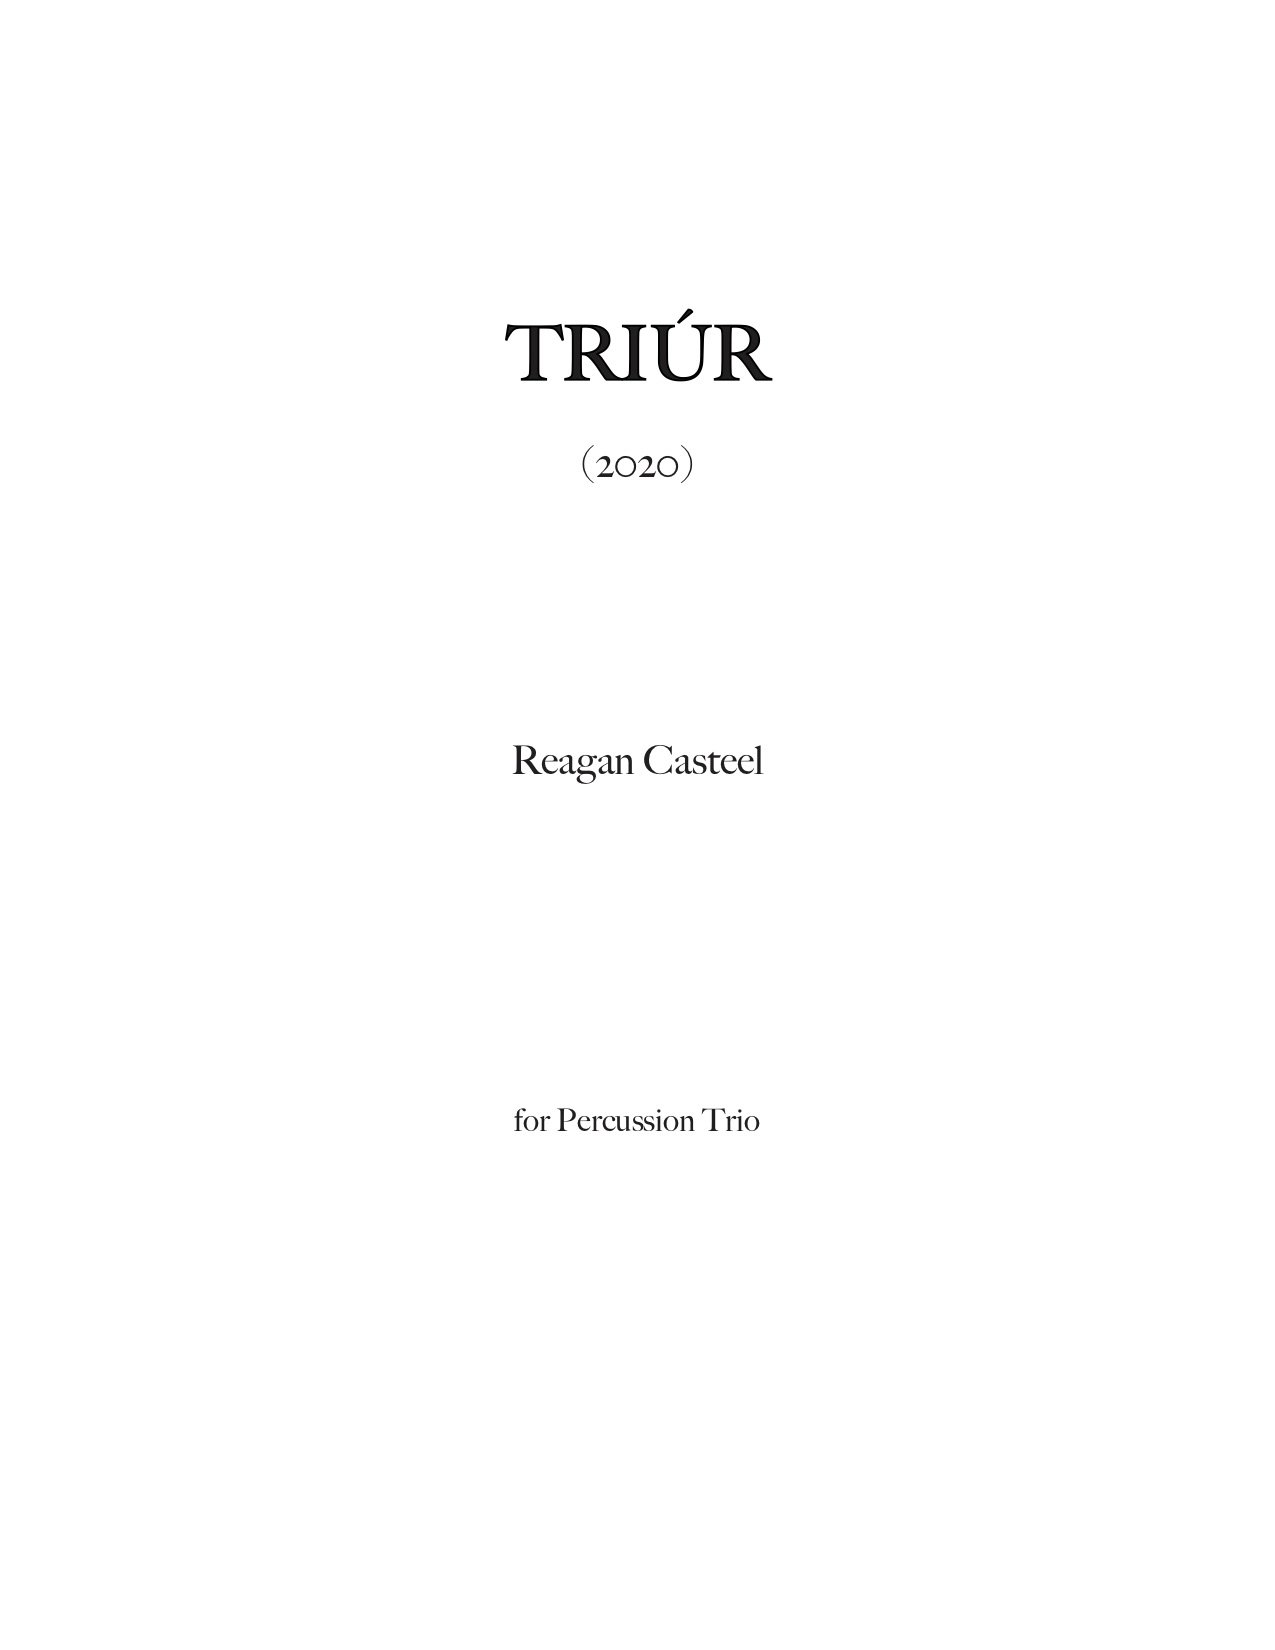 Triur Full Score and Parts copy (dragged).jpg